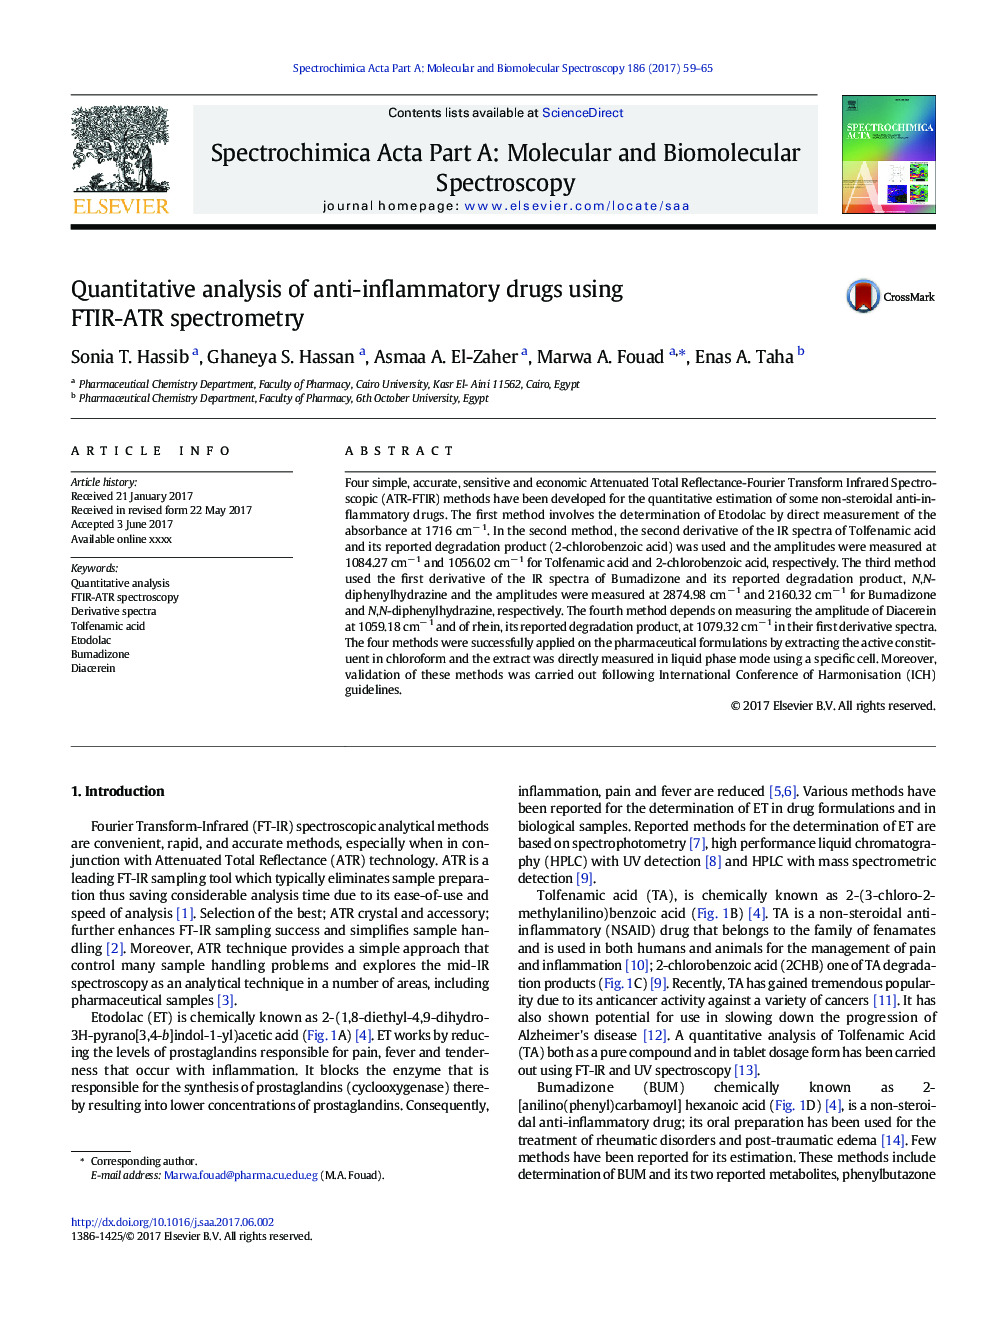 Quantitative analysis of anti-inflammatory drugs using FTIR-ATR spectrometry